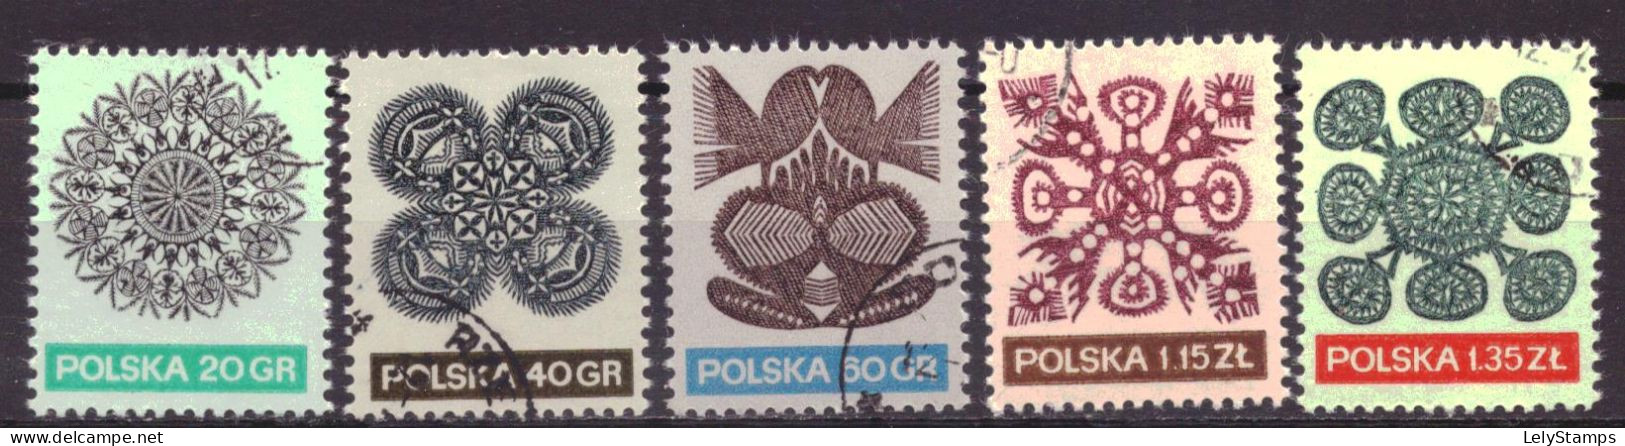 Polen / Poland / Polska 2092 T/m 2096 Used Kant (1971) READ! - Used Stamps